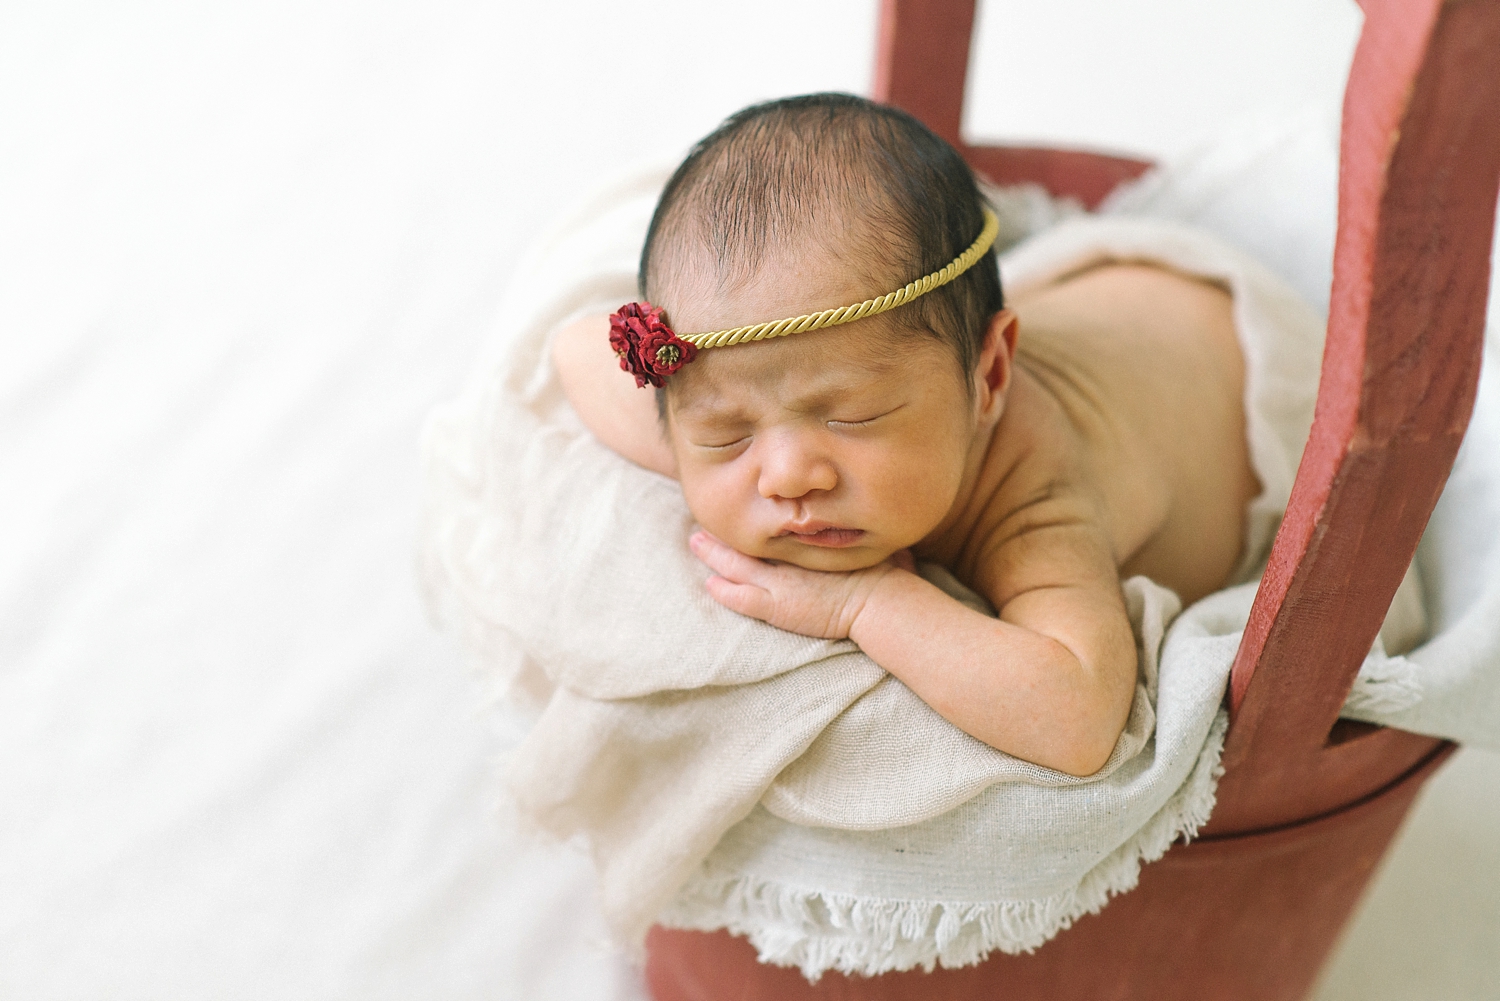 portland-oregon-newborn-photographer-sleeping-baby-girl-red-basket-shelley-marie-photography-3.jpg